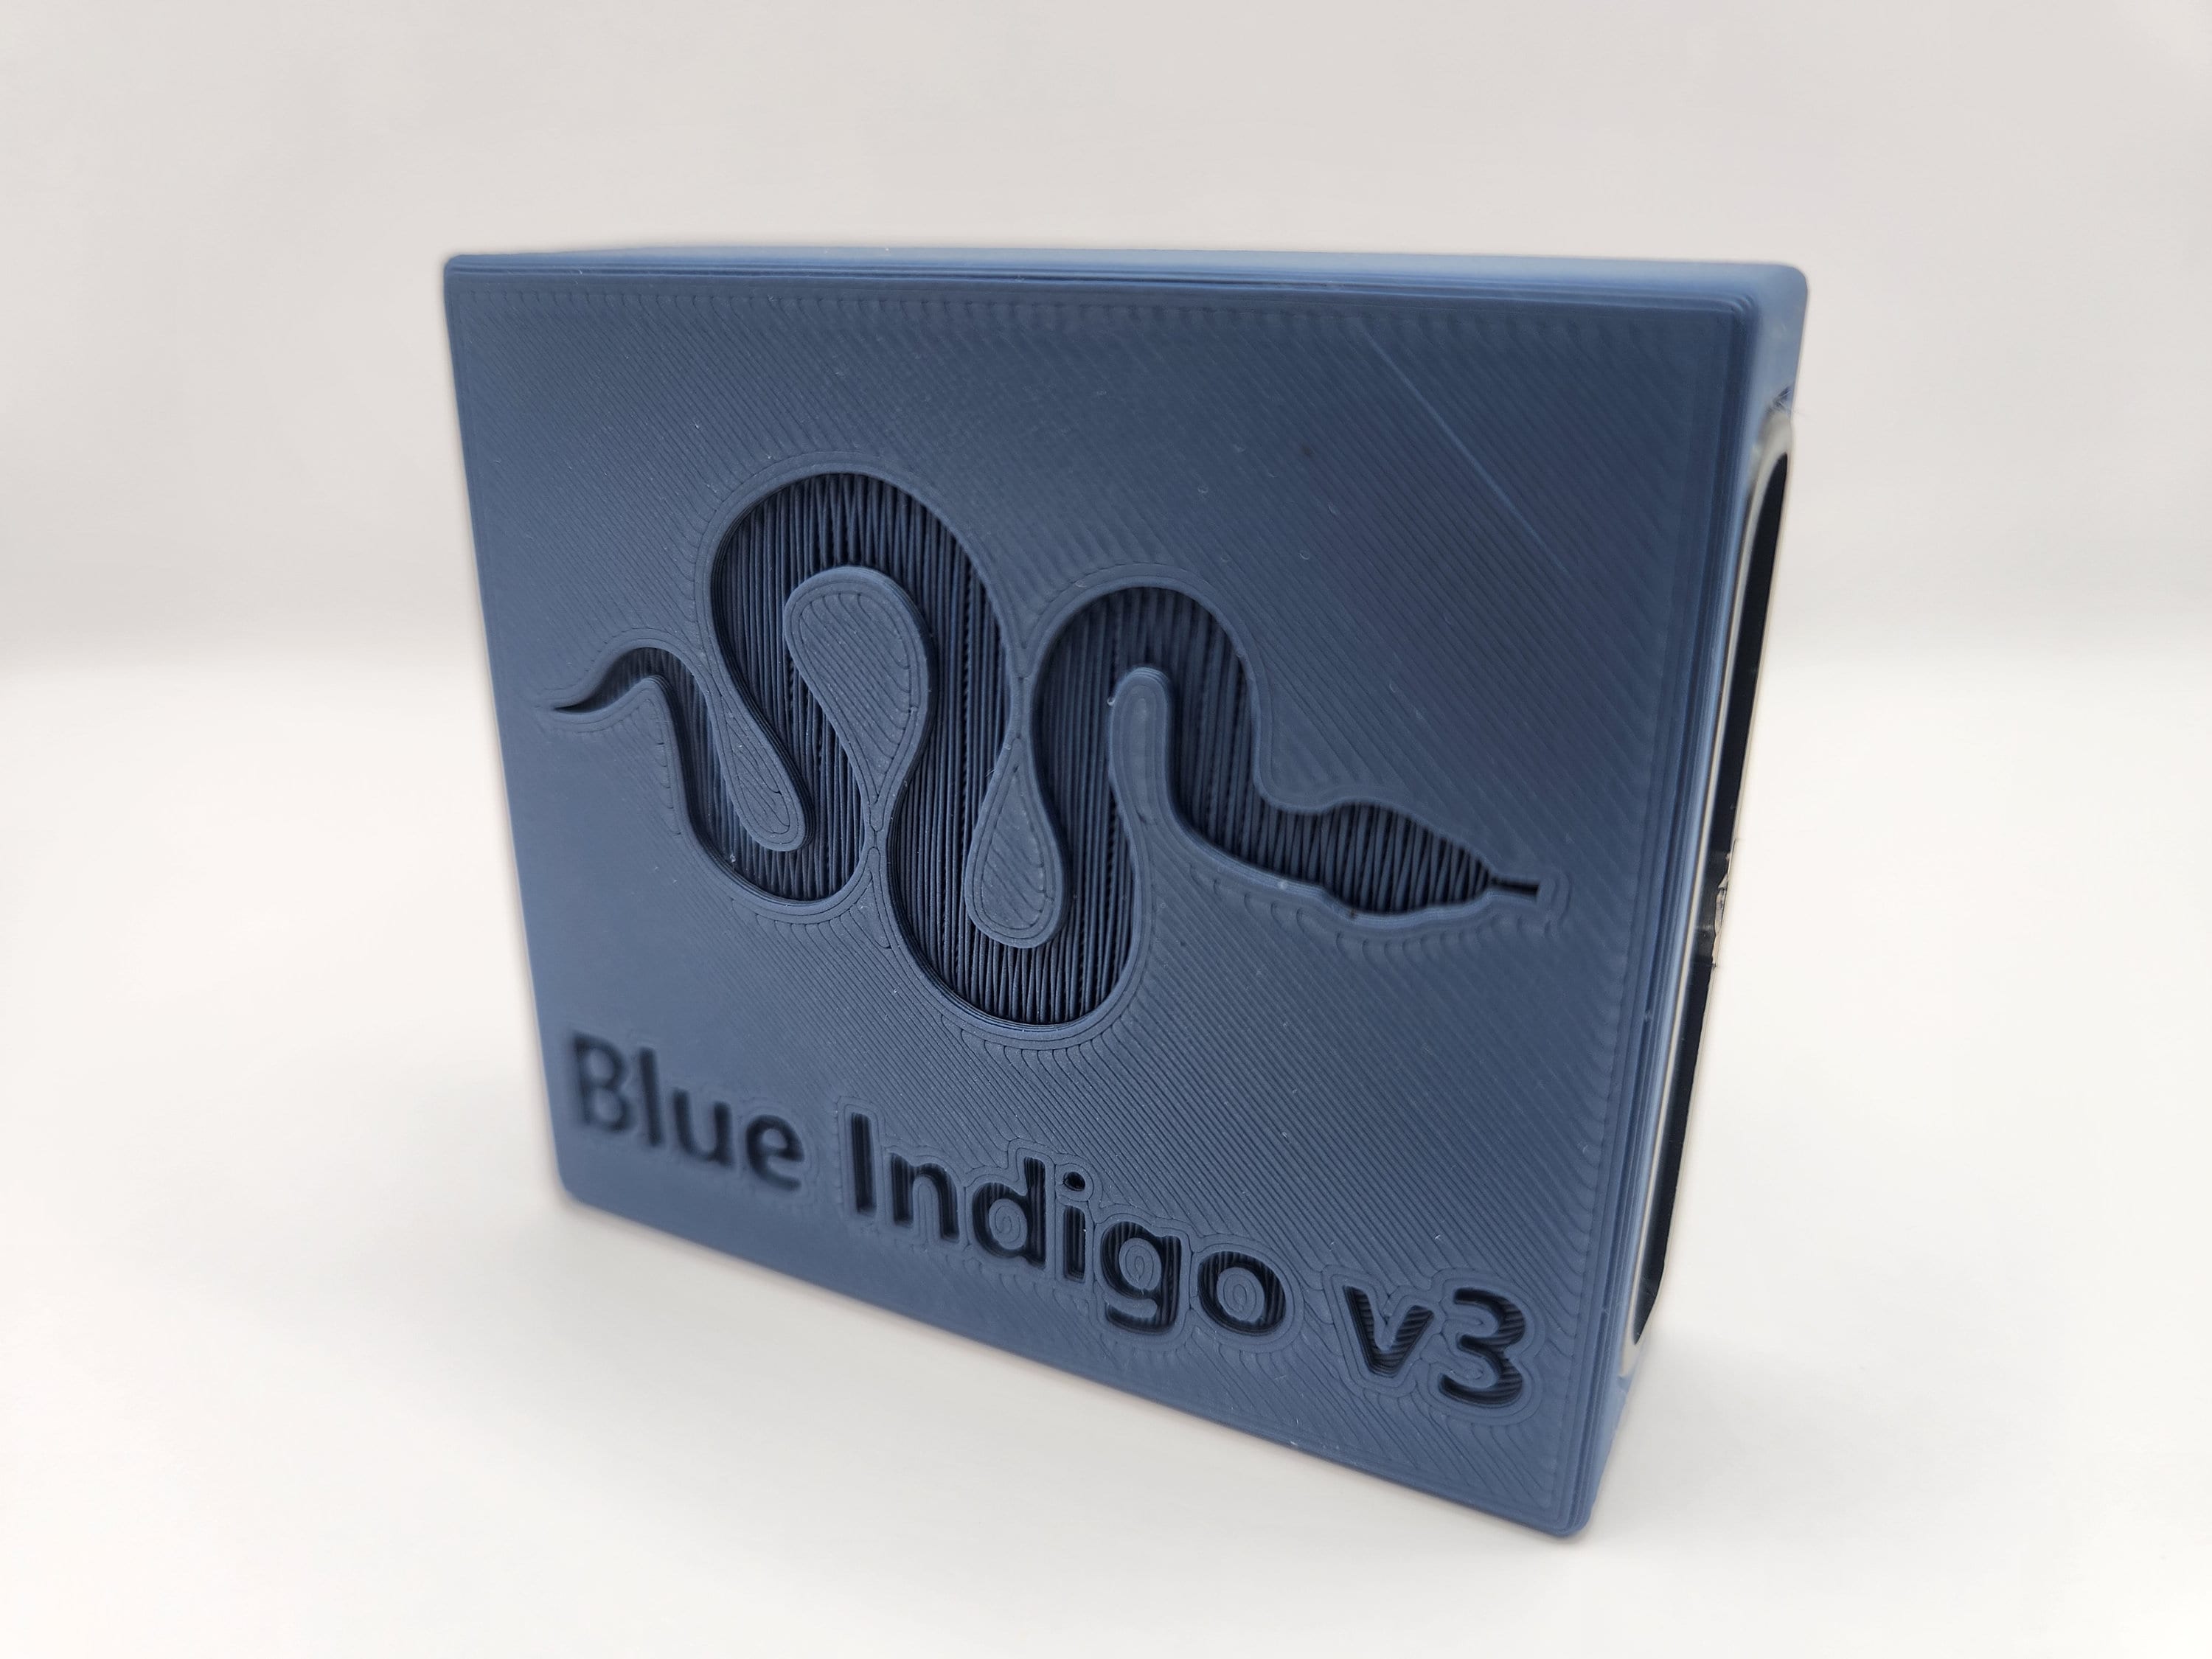 Hardware Review: Blue Indigo, PS2 to PC Guitar Hero Adapter - Hackinformer